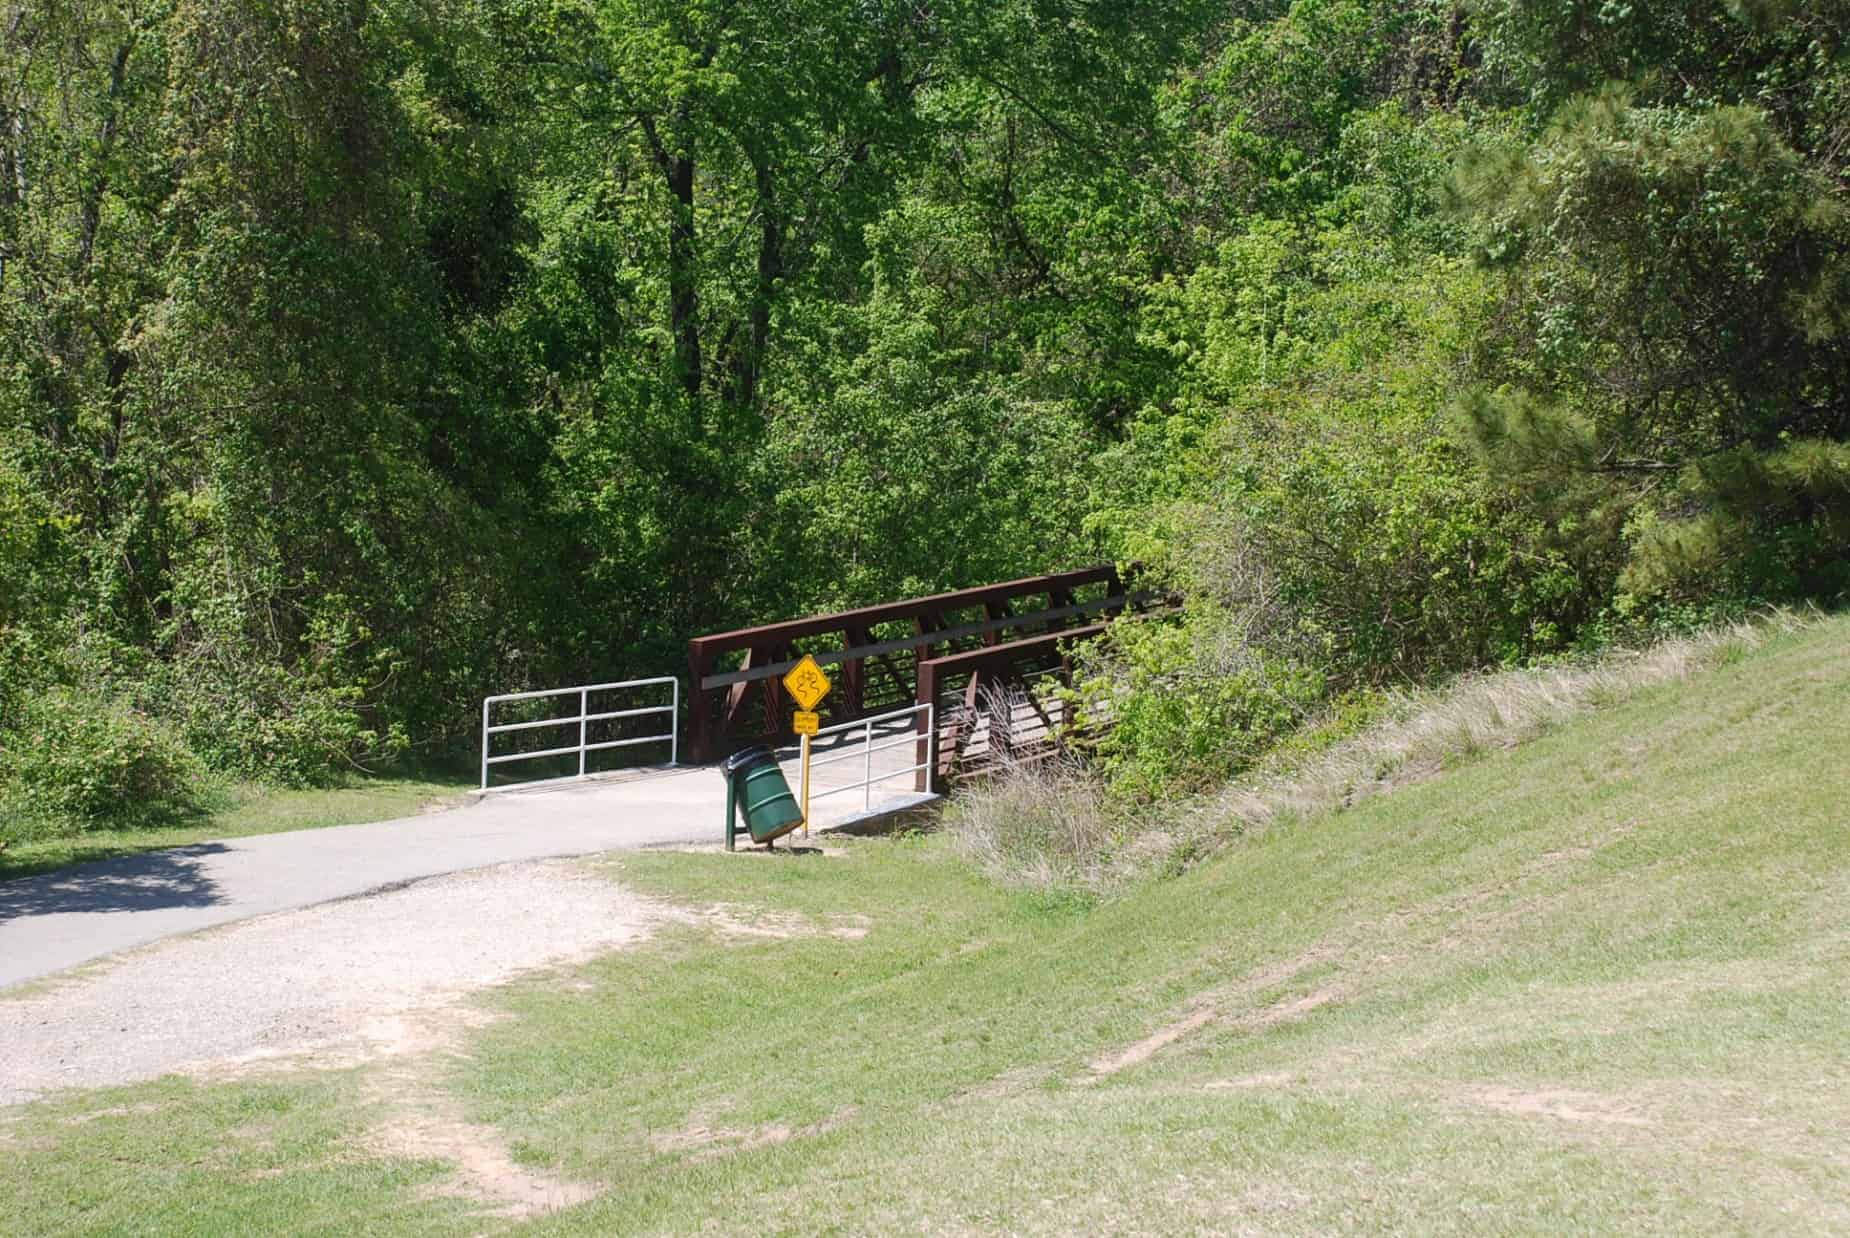 Terry Hershey Park Houston TX Hike & Bike trail bridge over entering drainage channels into Buffalo Bayou